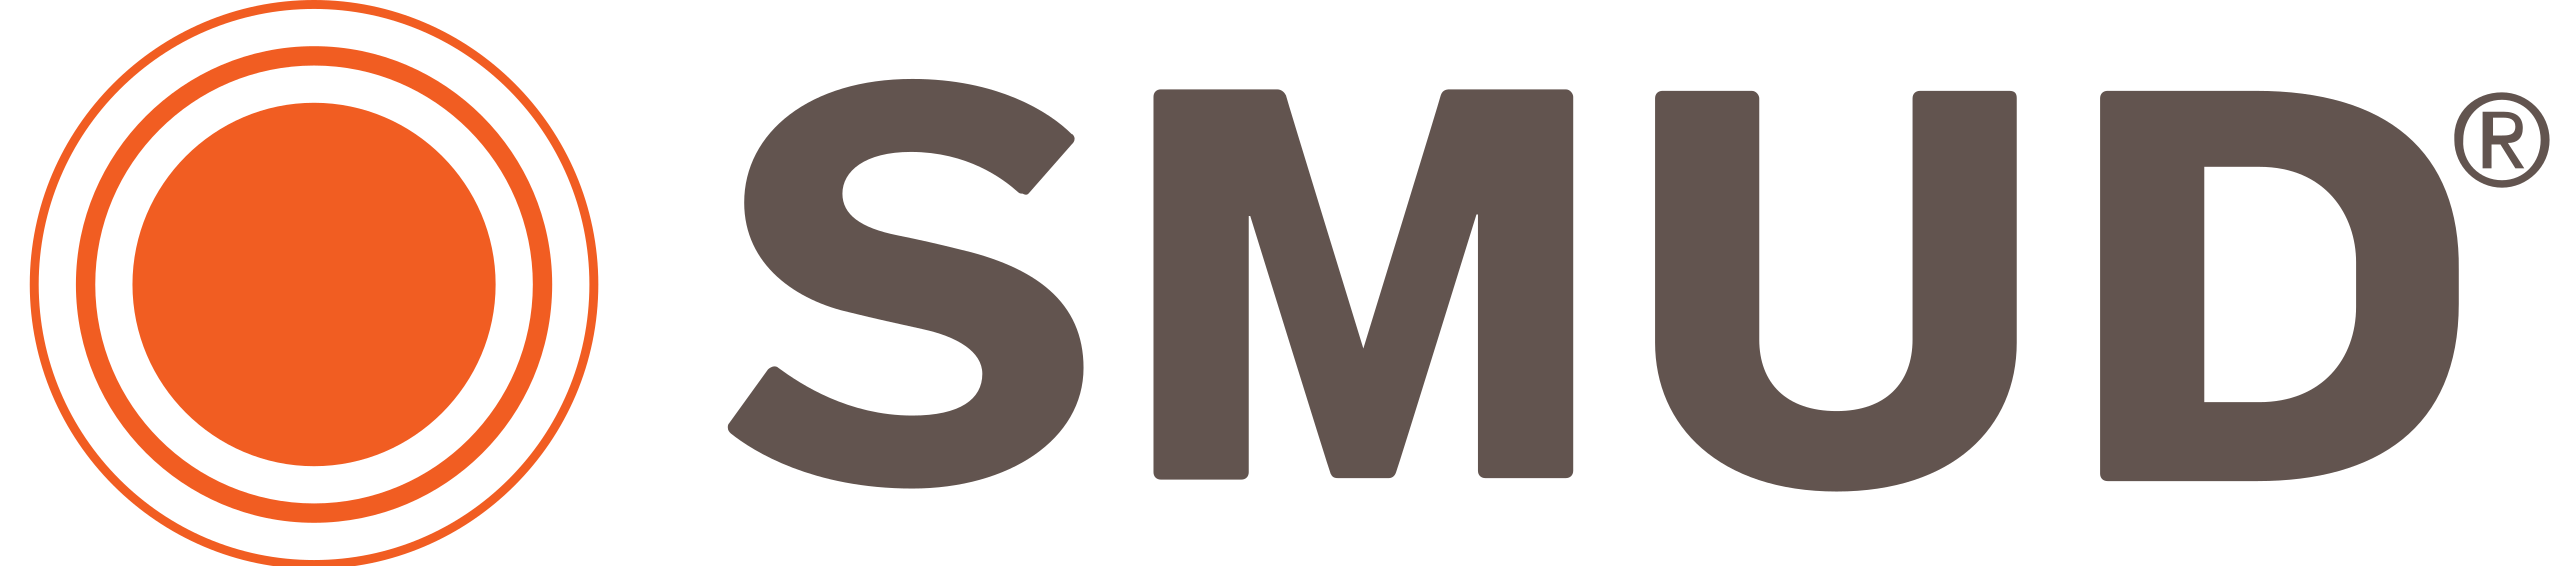 smud logo